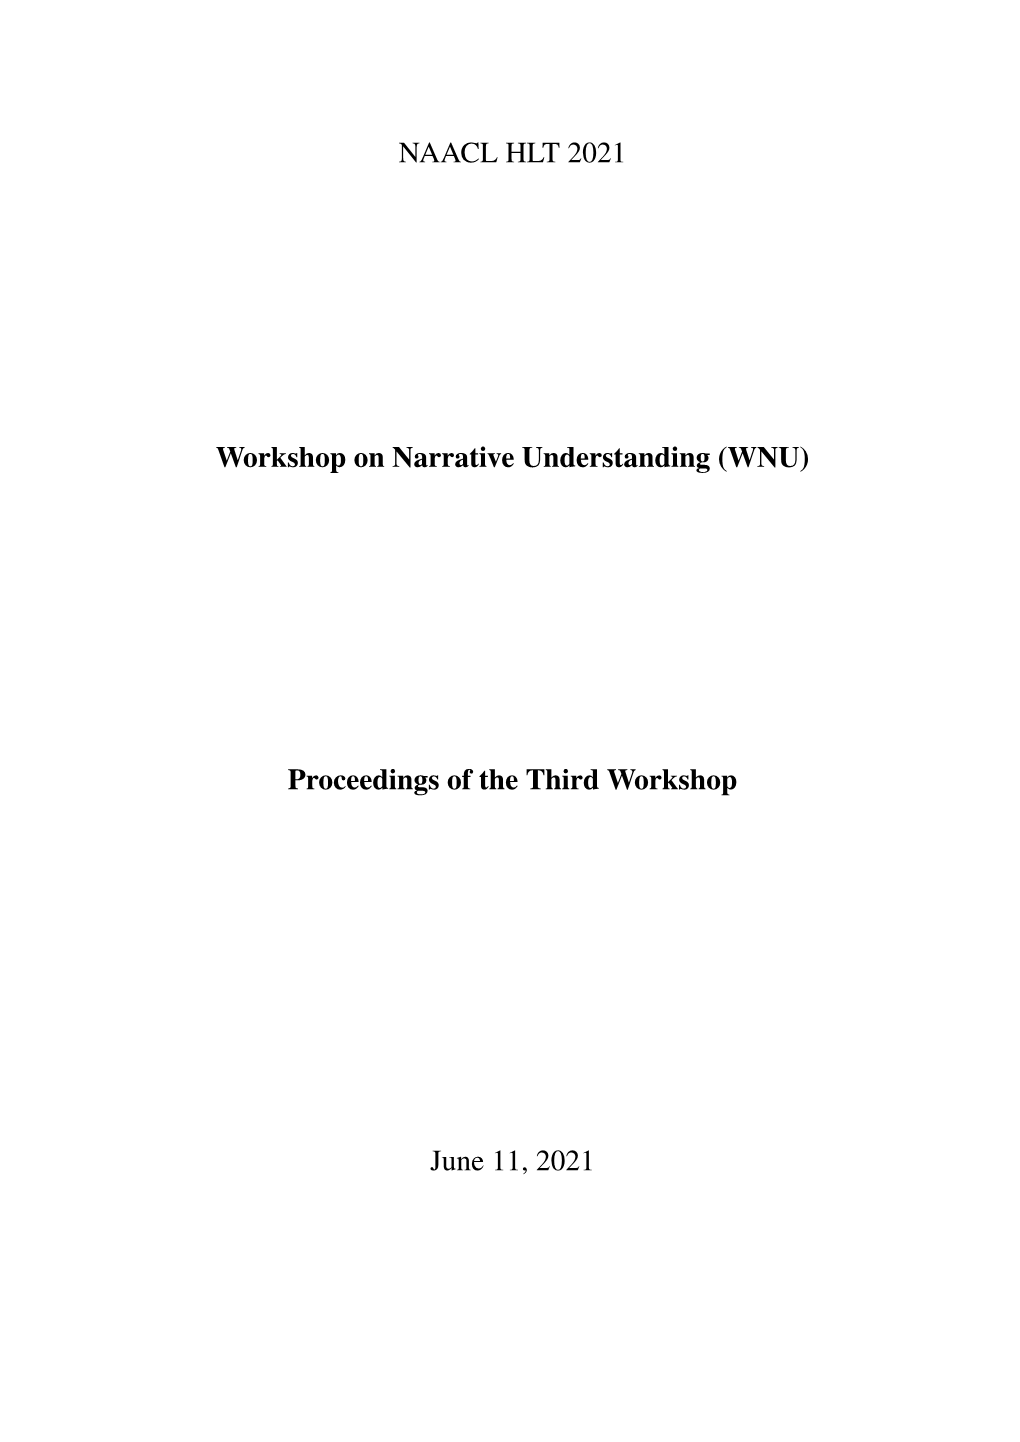 Proceedings of the Third Workshop on Narrative Understanding